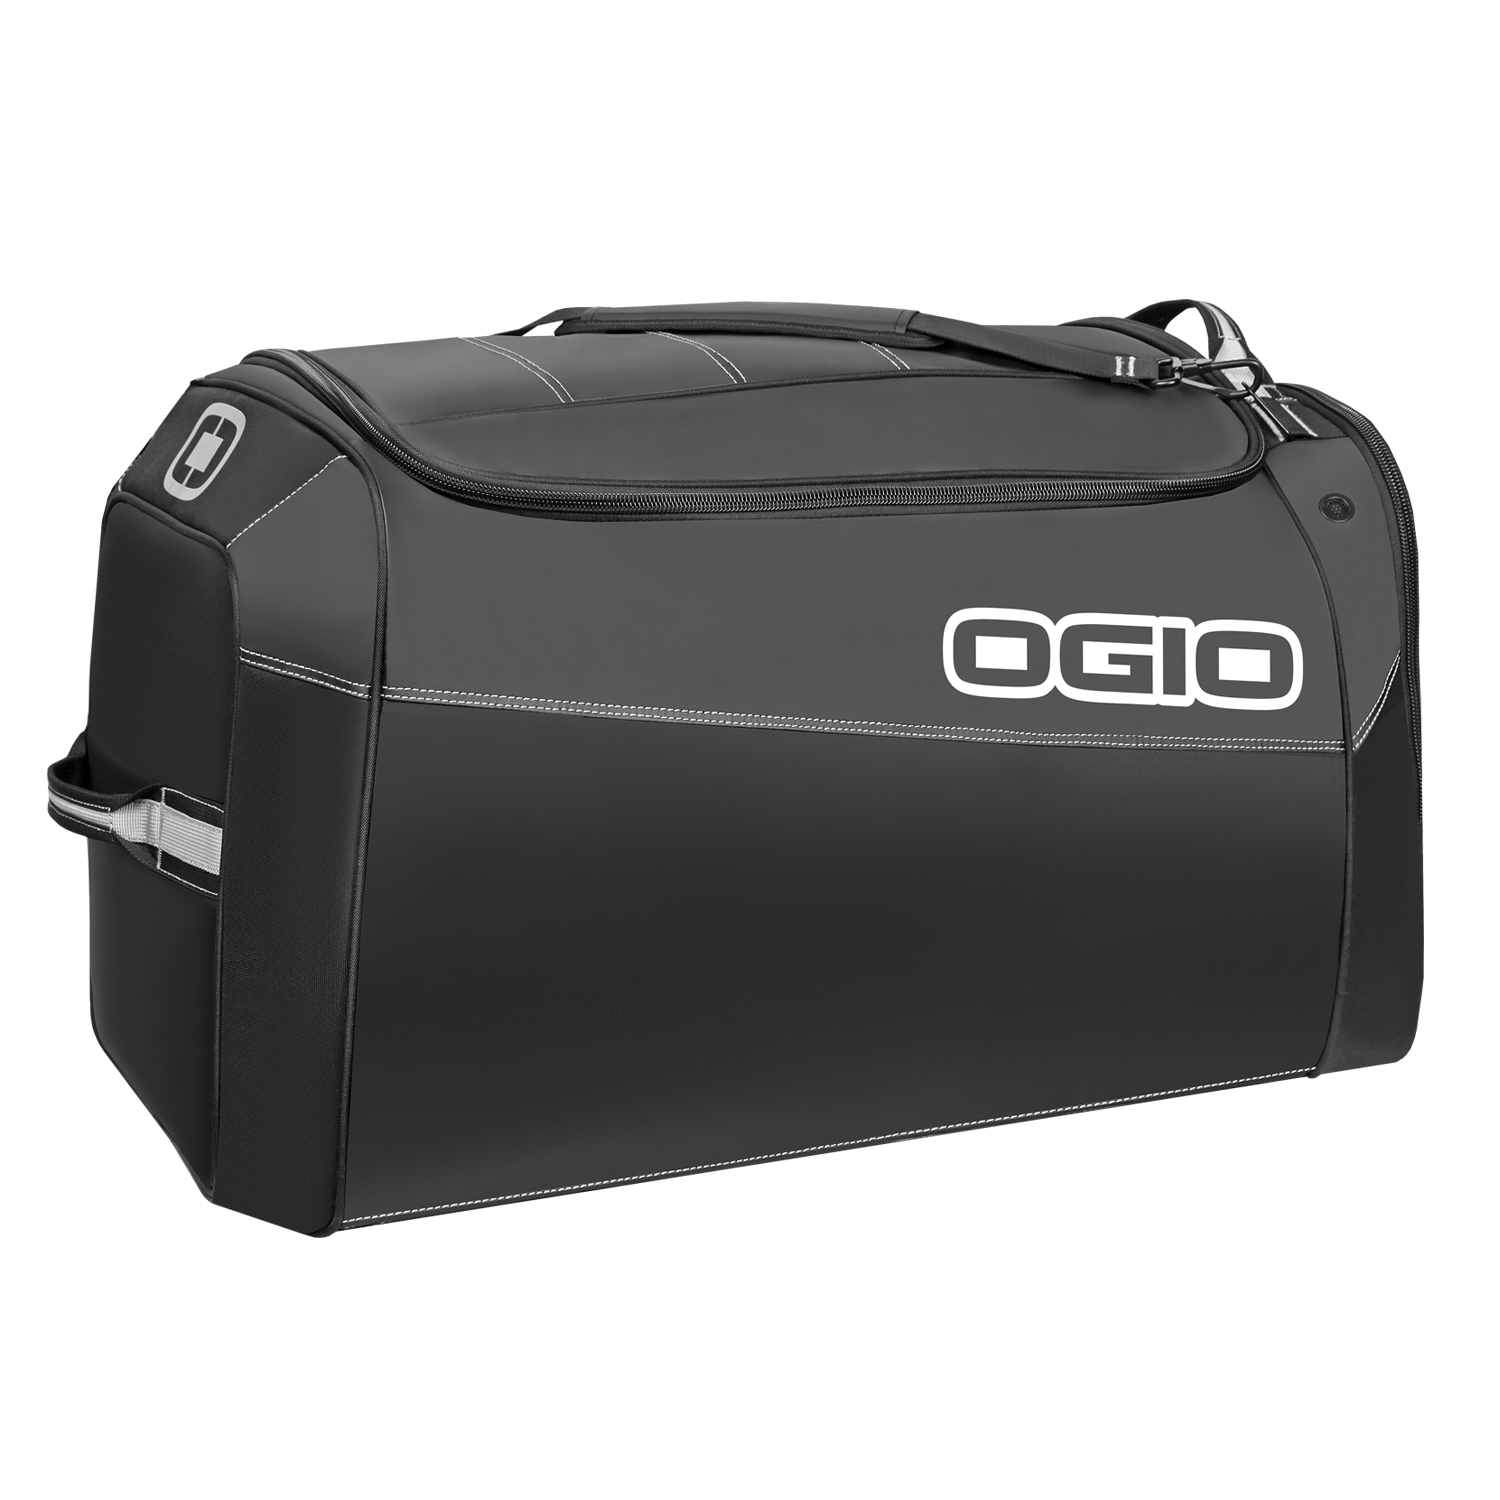 Ogio Travel Bag Prospect Stealth, 124 Liter